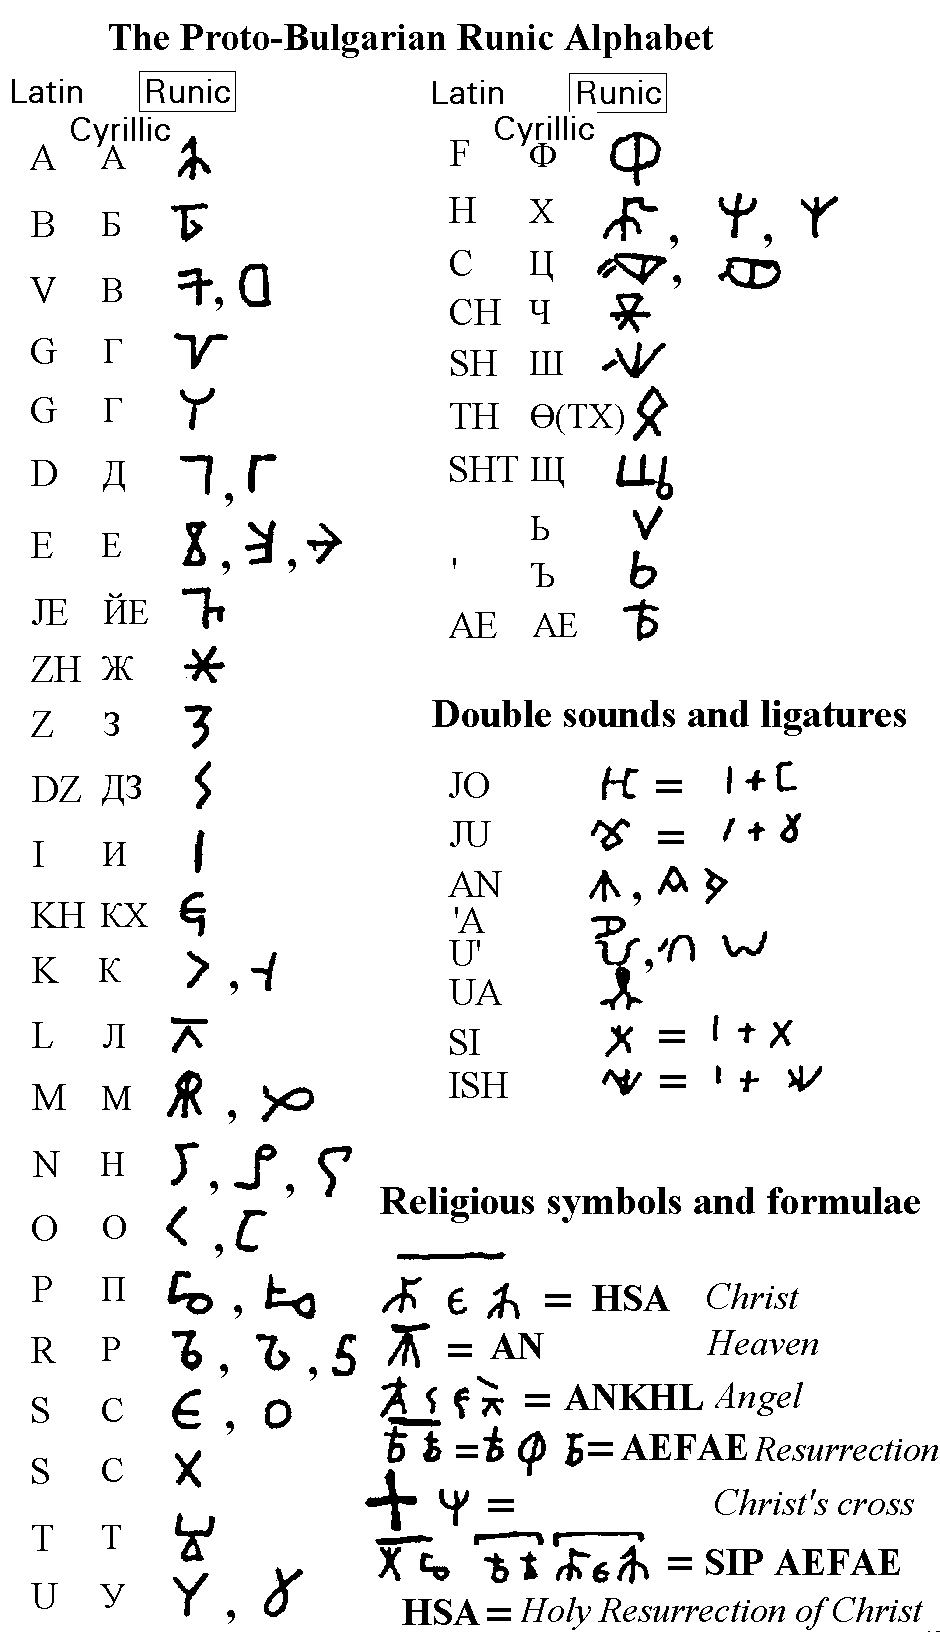 The Proto-Bulgarian Runic Alphabet